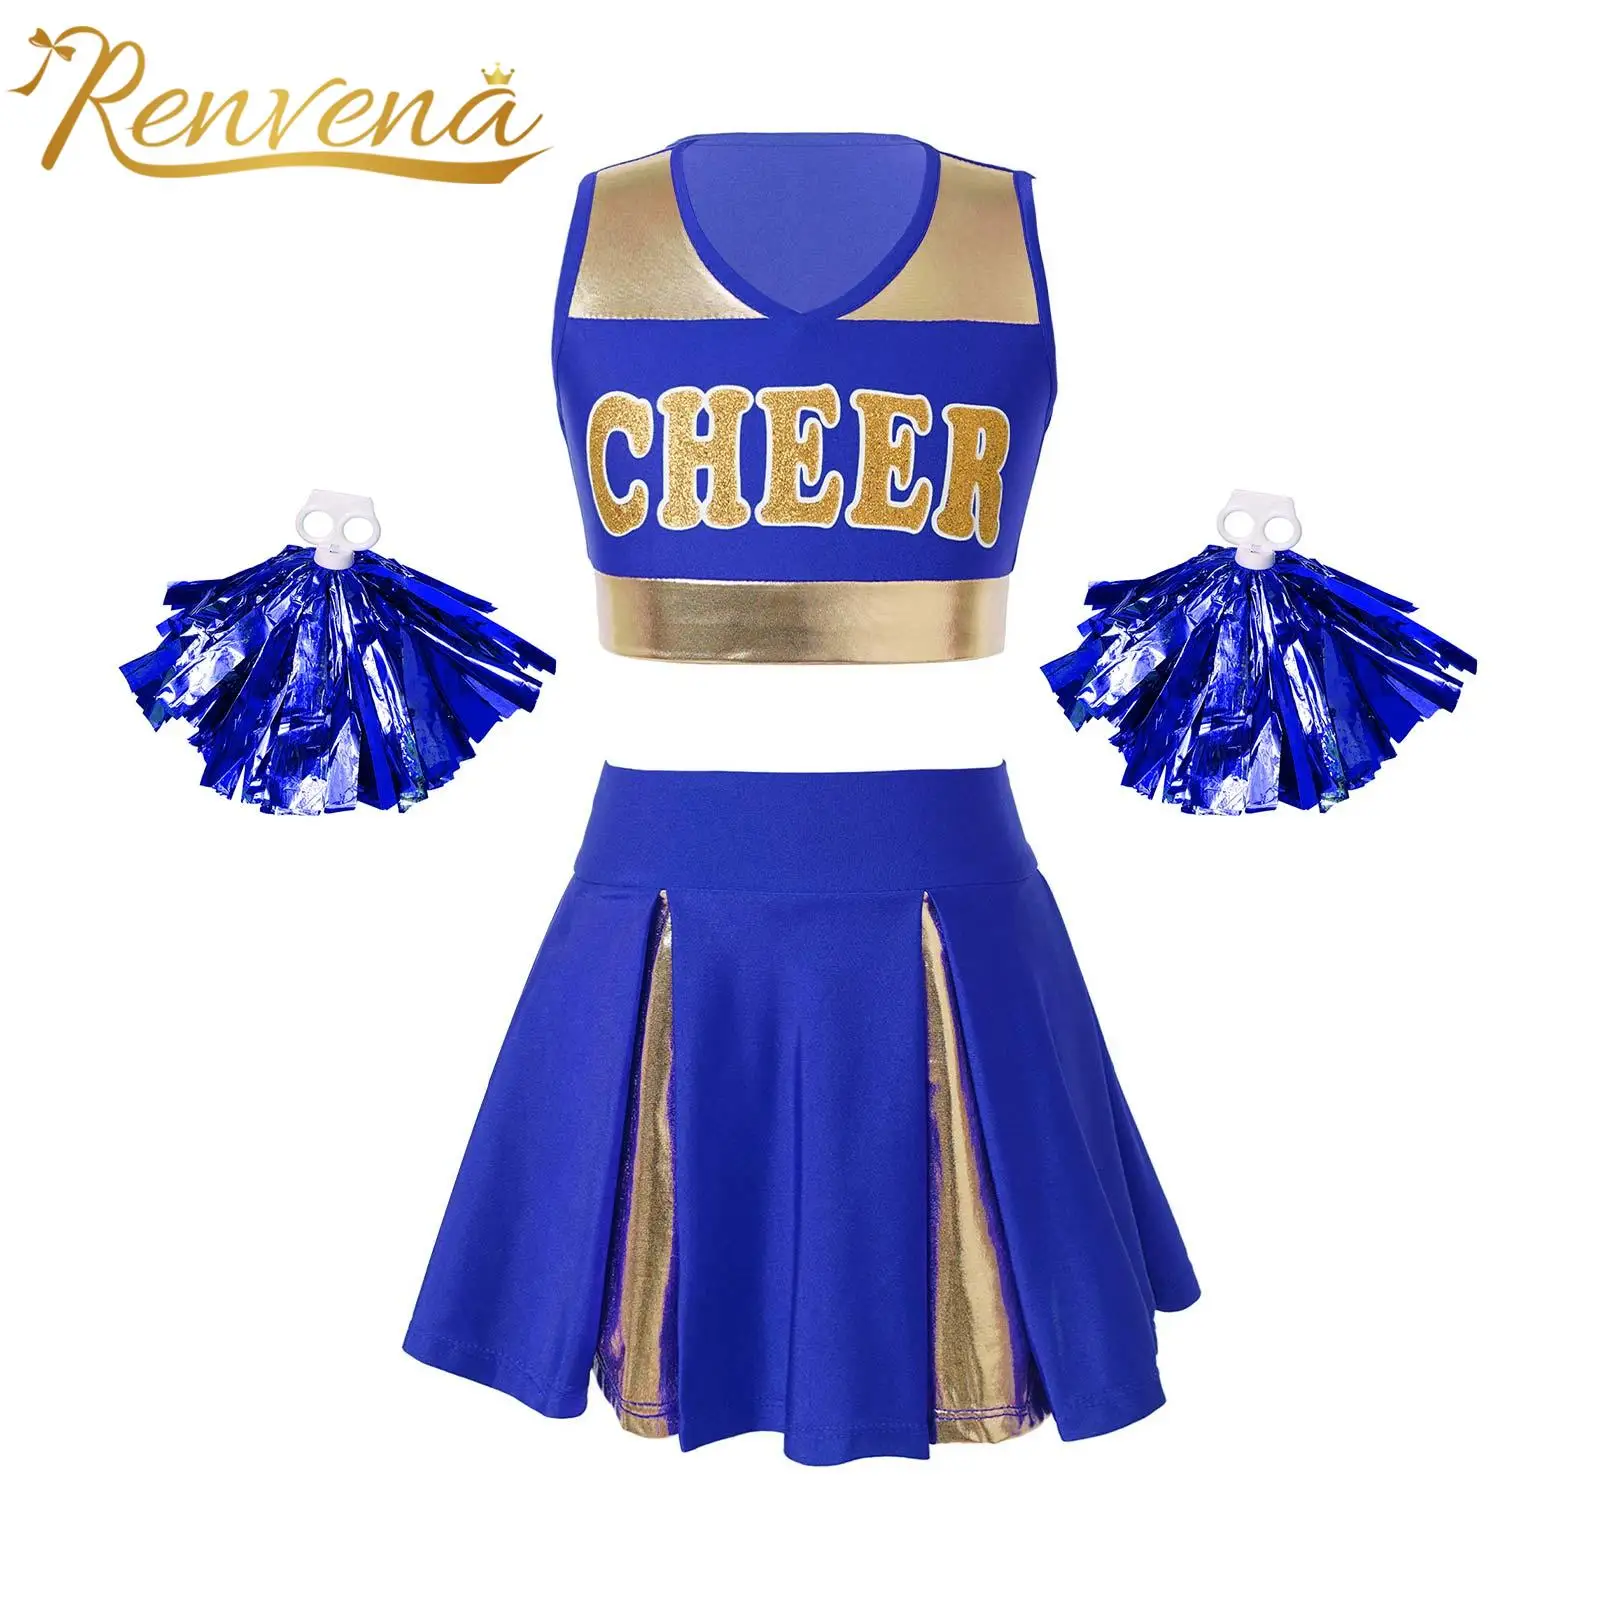 

Kids Cosplay Cheerleading Uniforms School Girls Cheerleader Costume Cheer Dance Outfits Children Sports Clothes Sets Dancewear